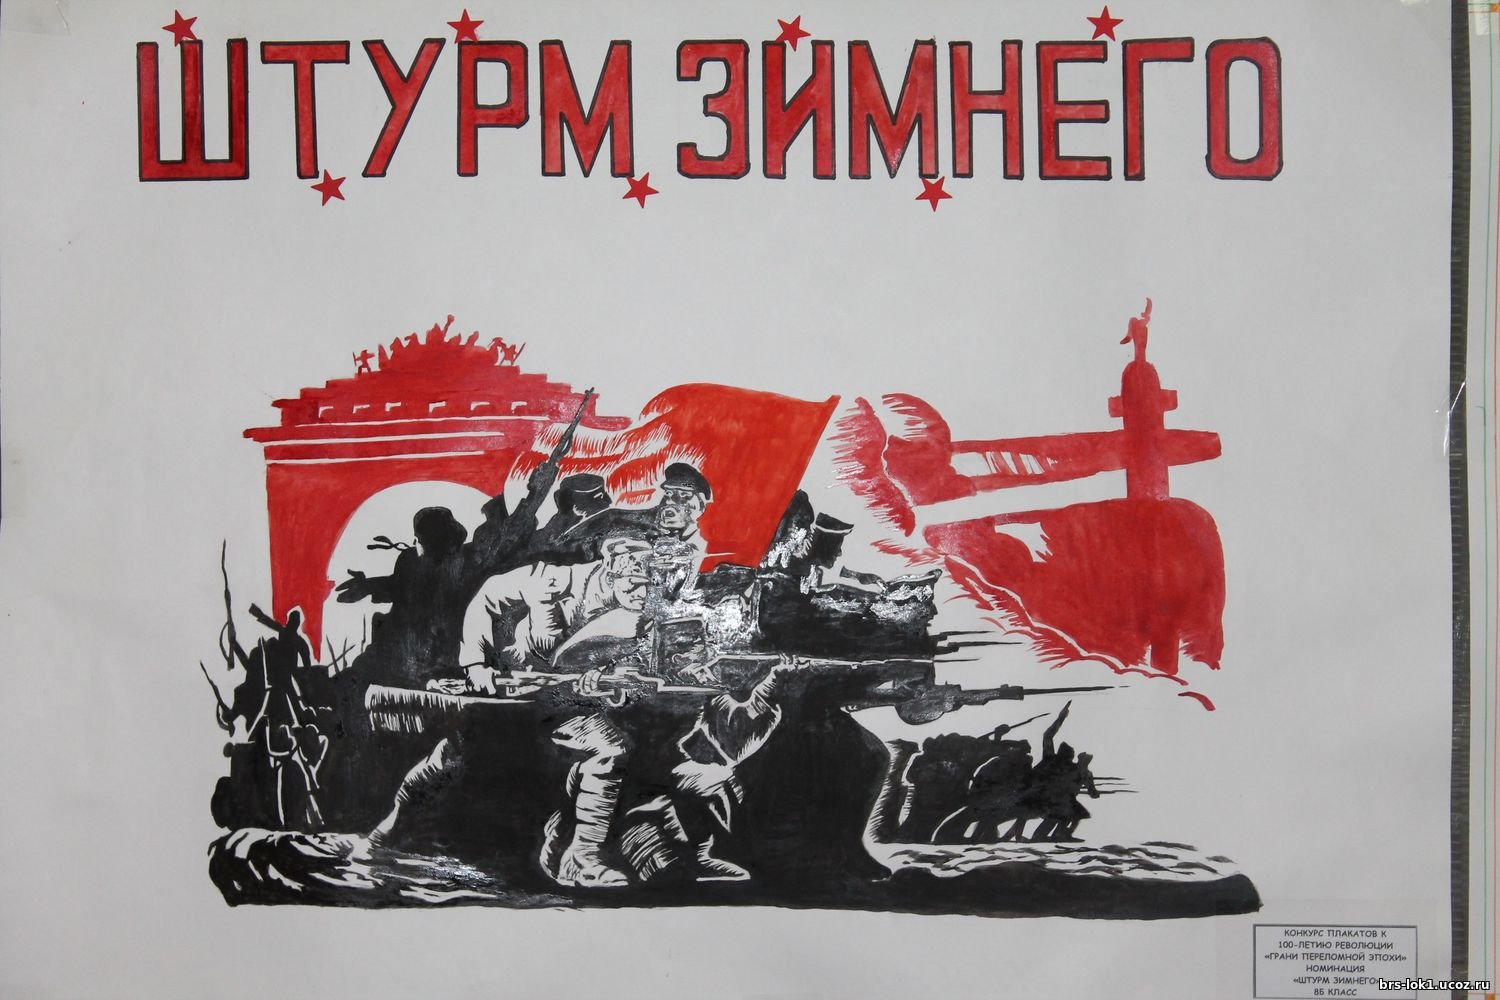 Октябрьская революция детям. Октябрьская революция 1917 года плакаты. Октябрьская революция 1917 лозунги. Плакаты октябрь 1917 года революция. Революционные плакаты 1917.